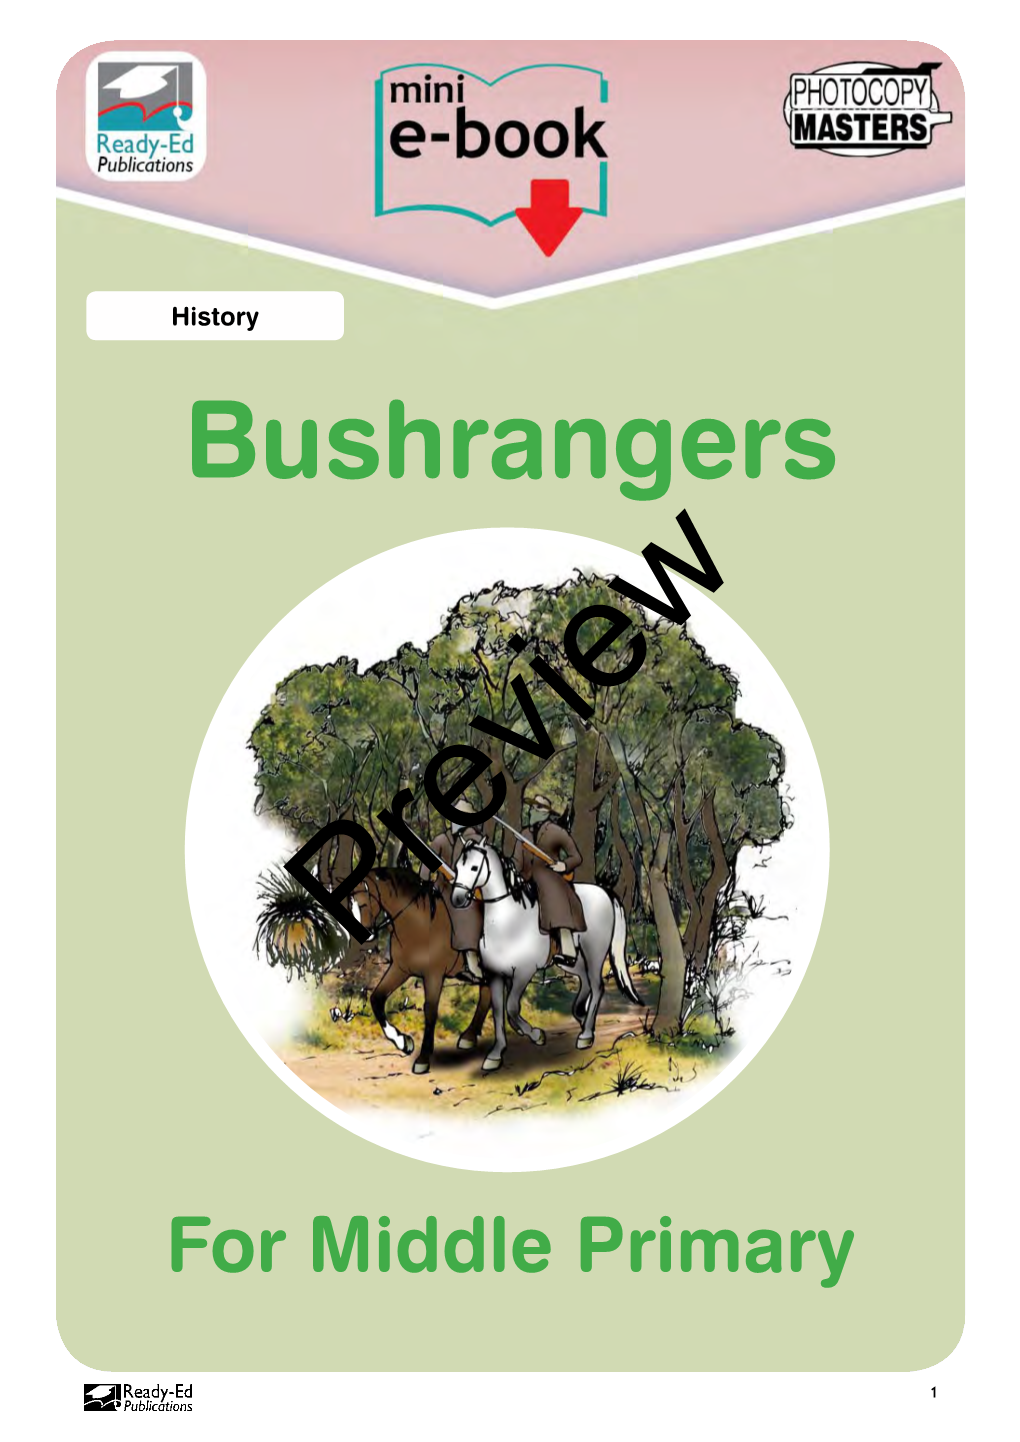 Bushrangers for Middle Primary